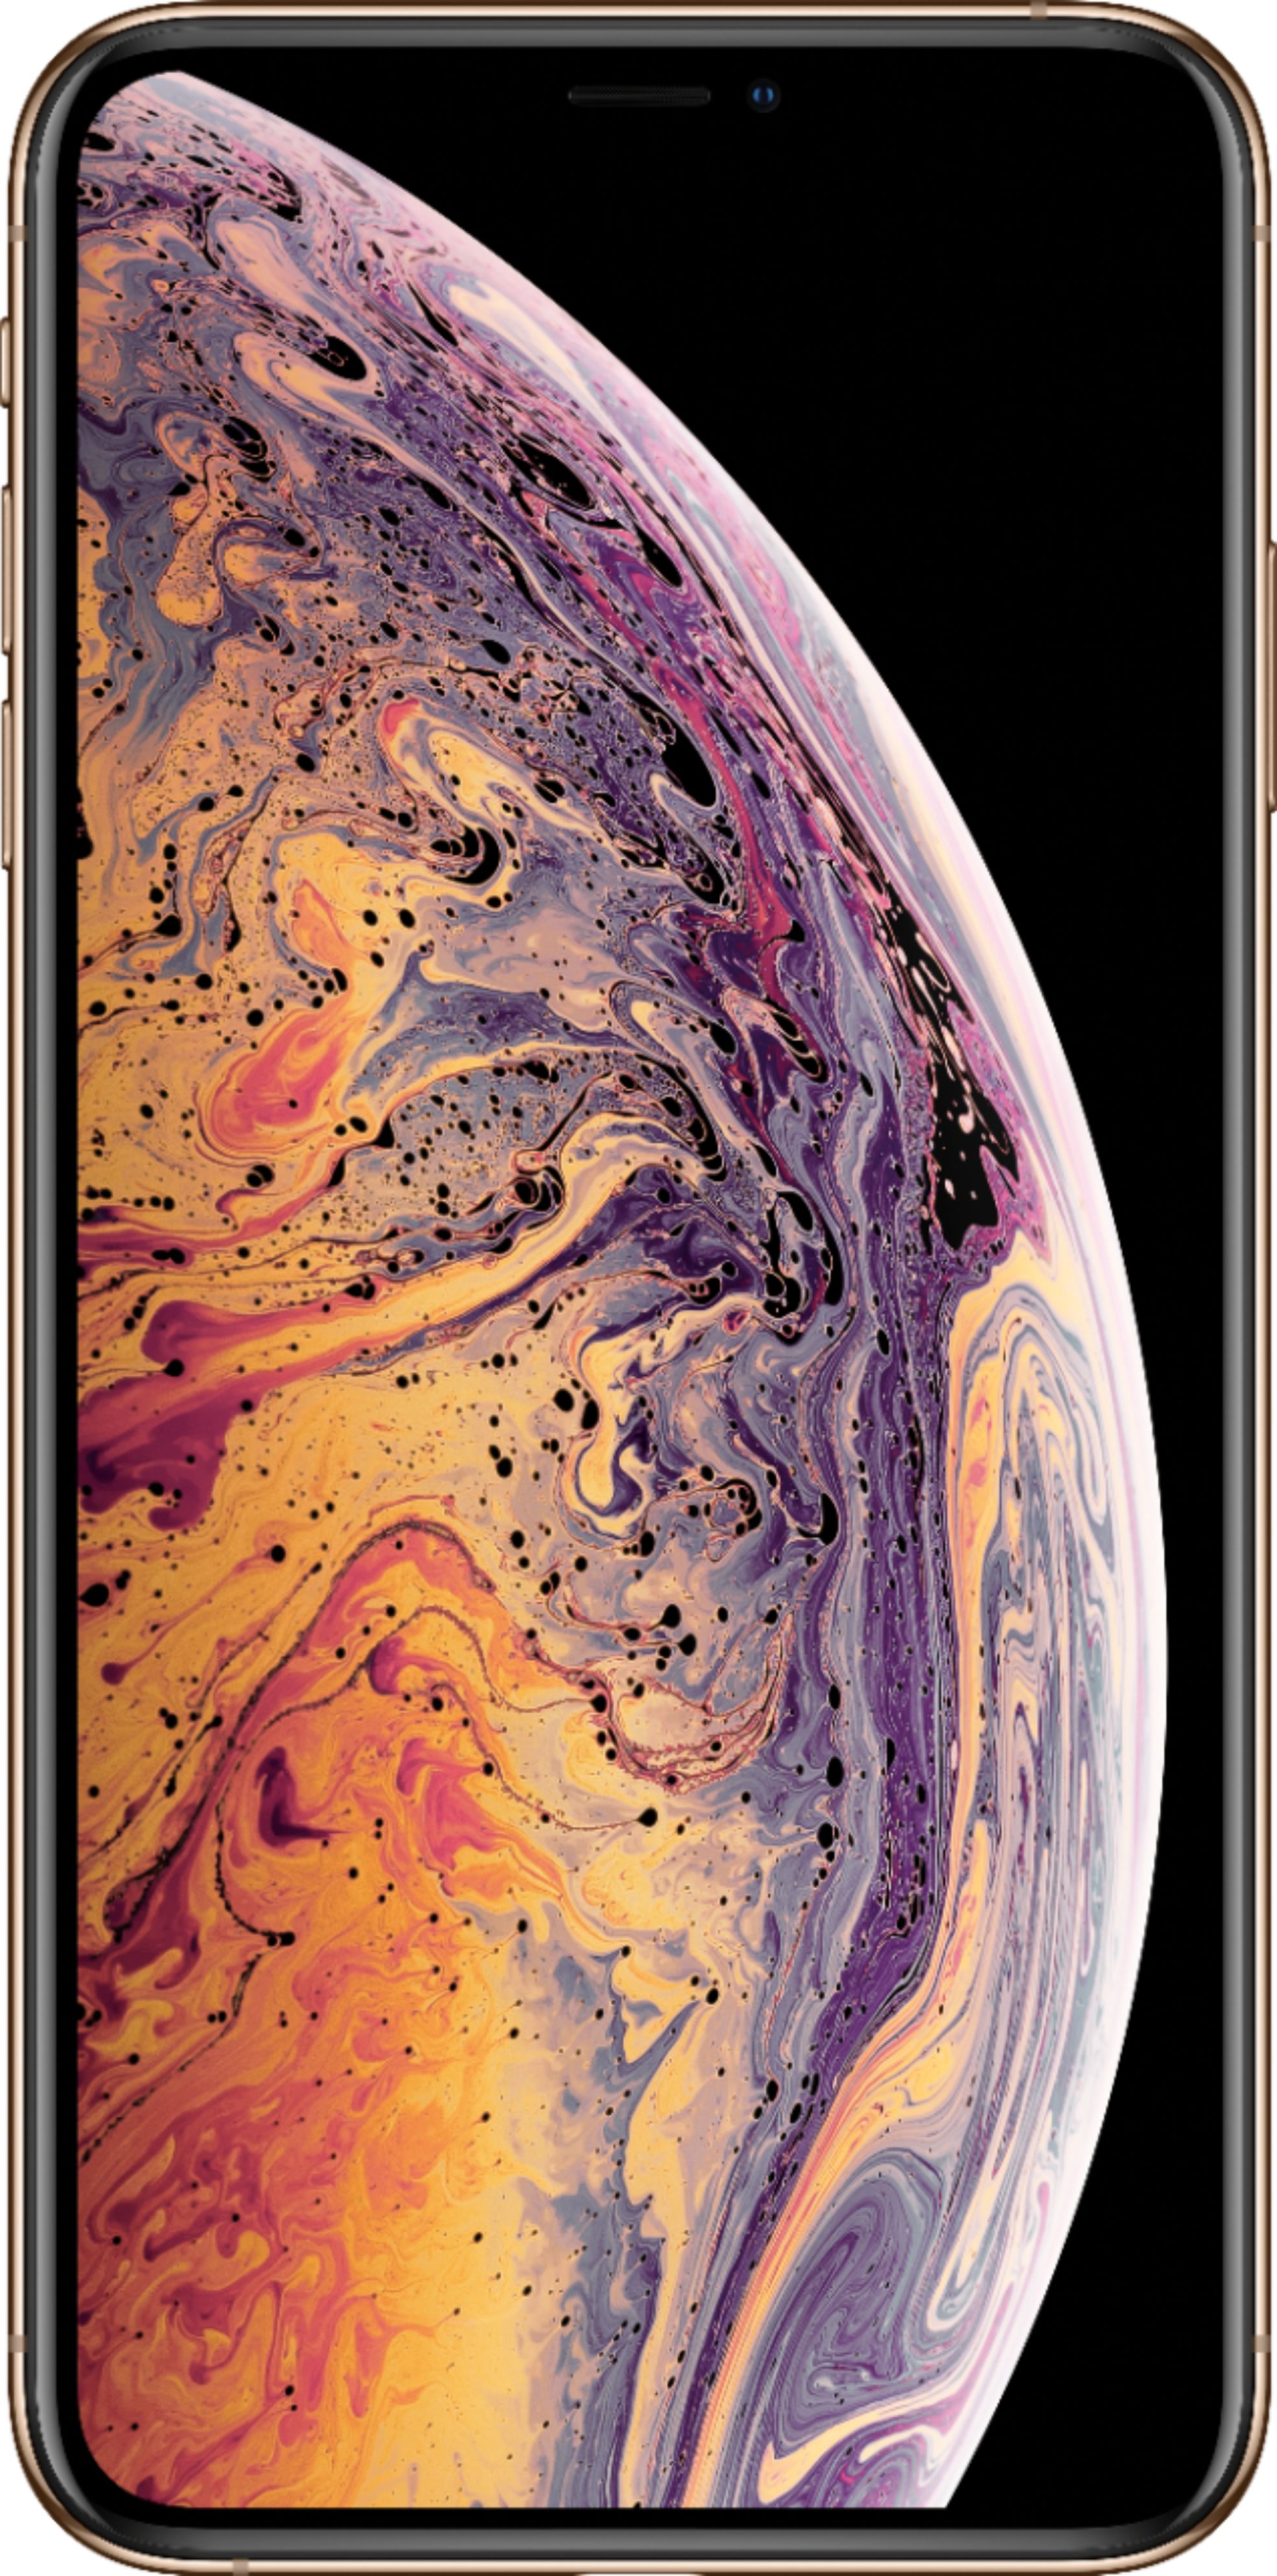 Apple iPhone XS Max 256GB Gold (AT&T) MT5F2LL/A - Best Buy